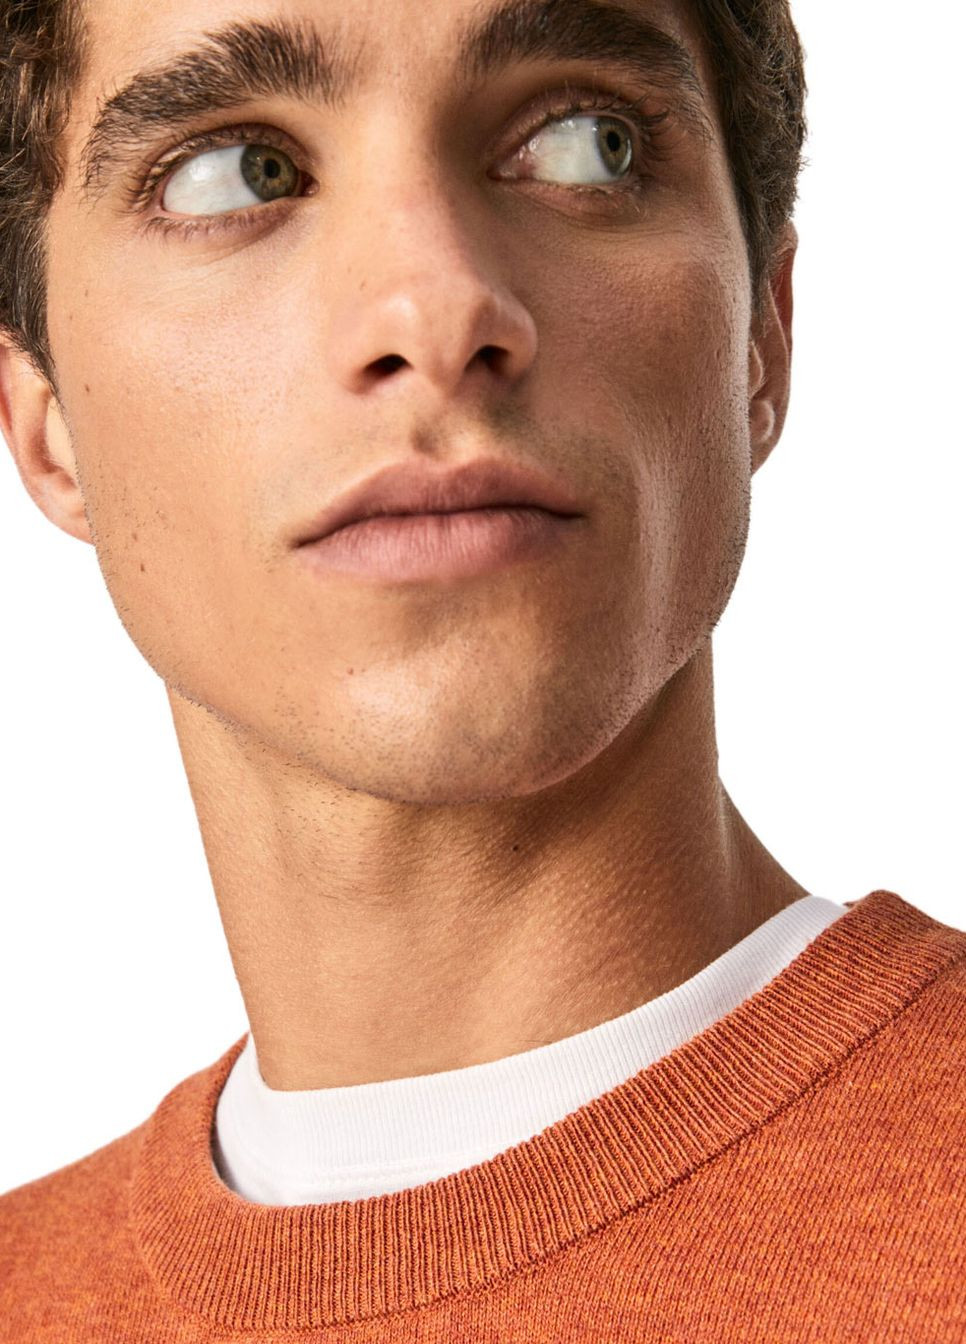 Оранжевый свитер Pepe Jeans